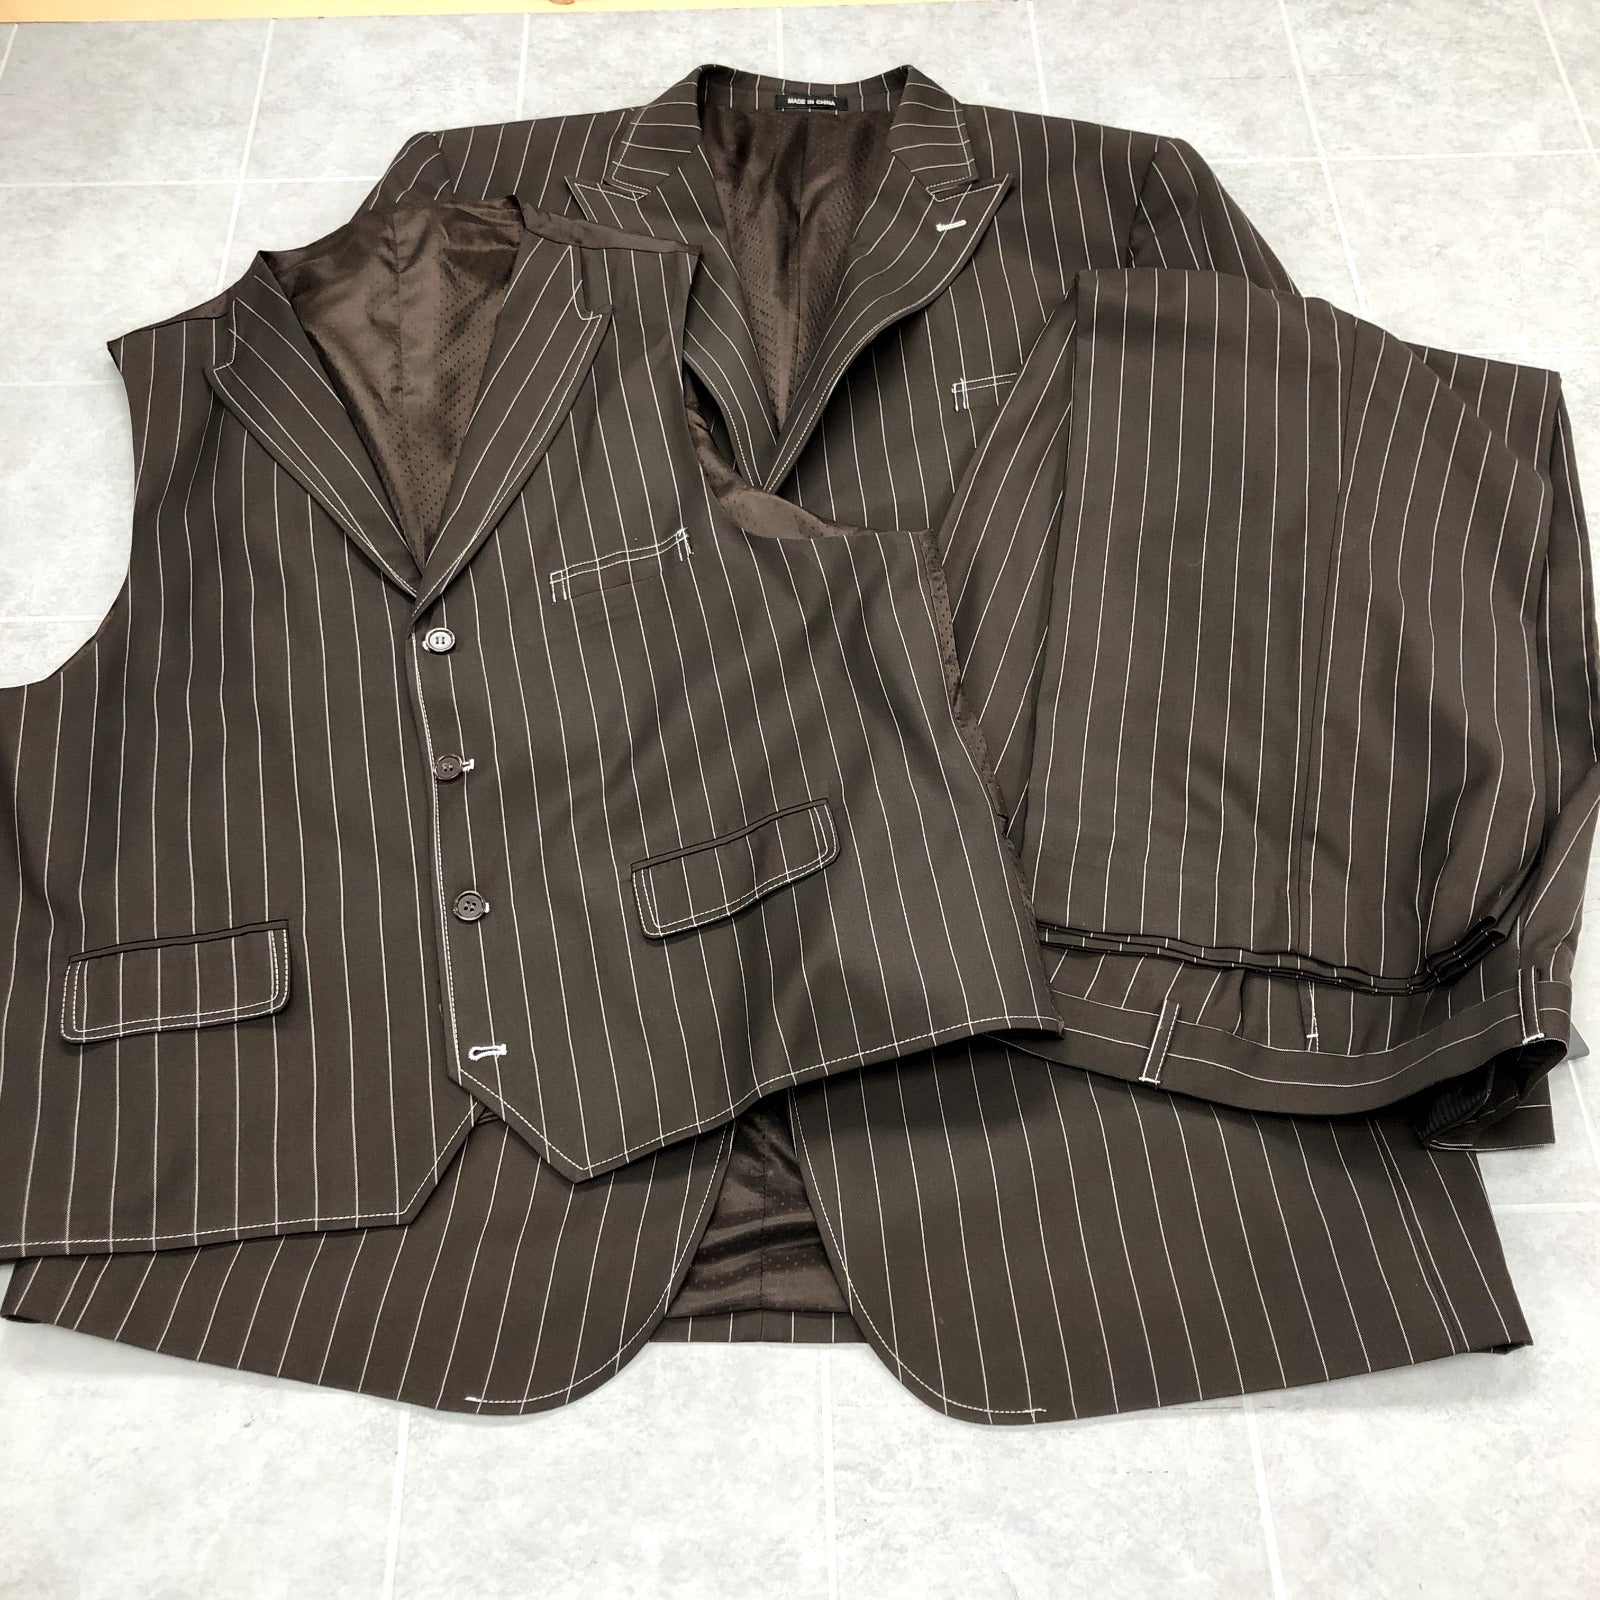 Fortino Landi Brown Pinstripe Lined Peak Lapel # Piece Zoot Suit Adult Size 50L